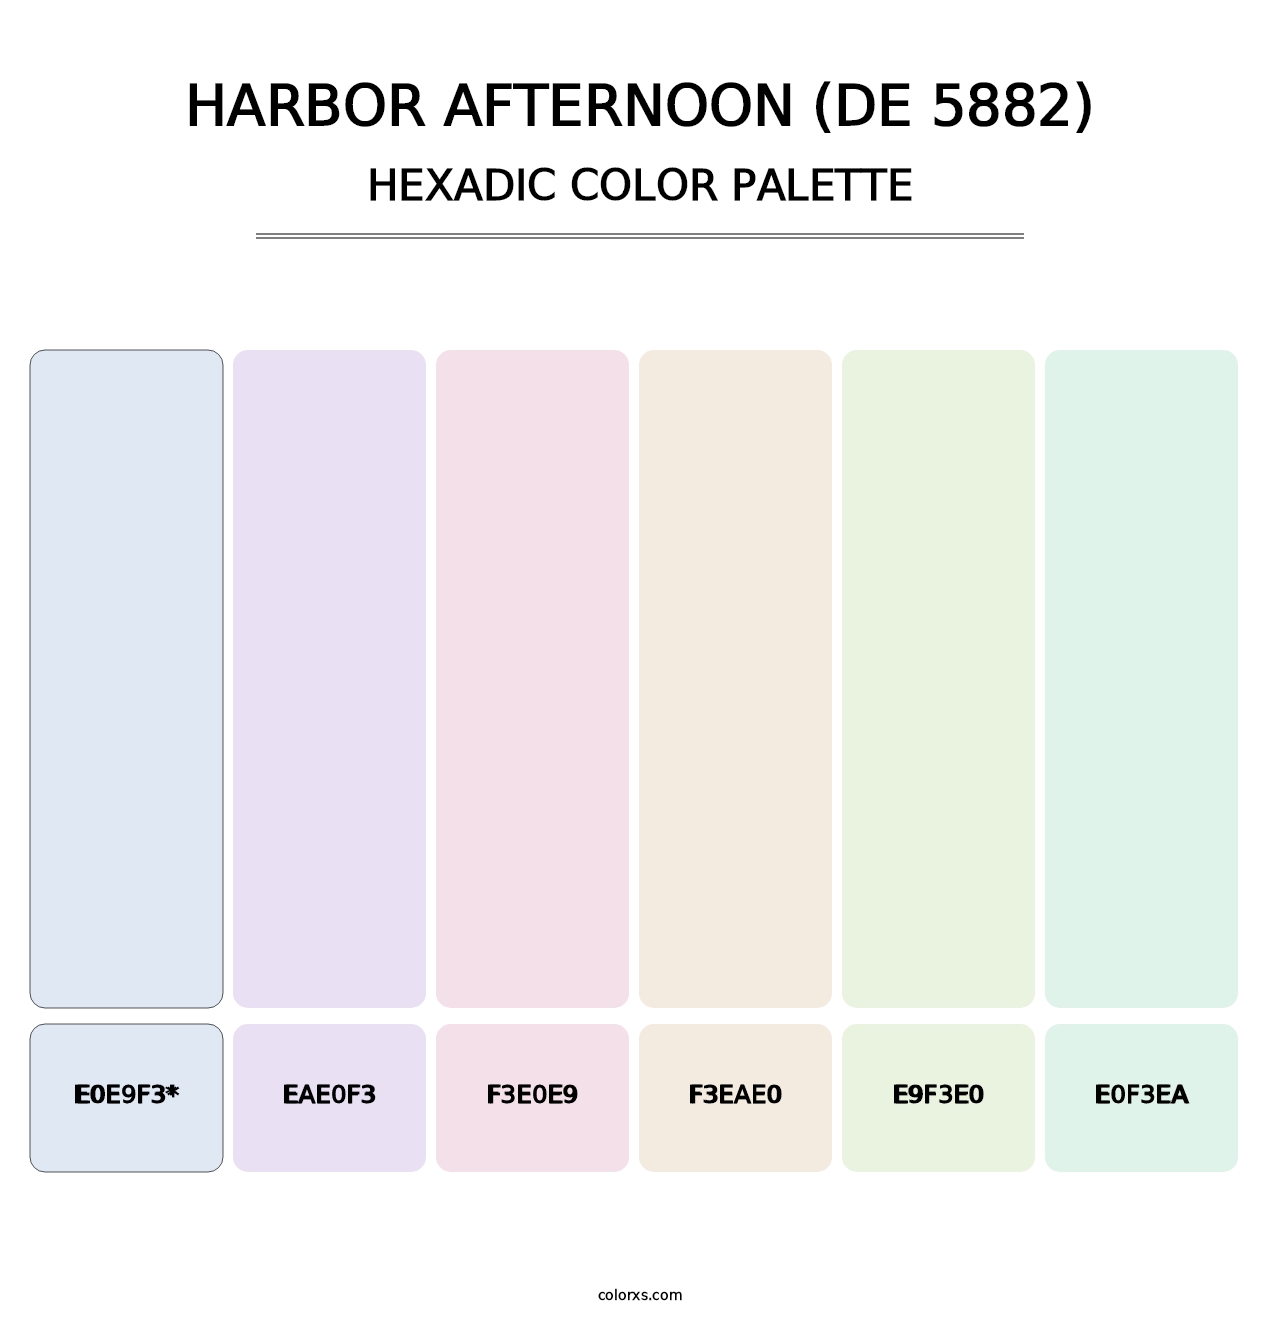 Harbor Afternoon (DE 5882) - Hexadic Color Palette